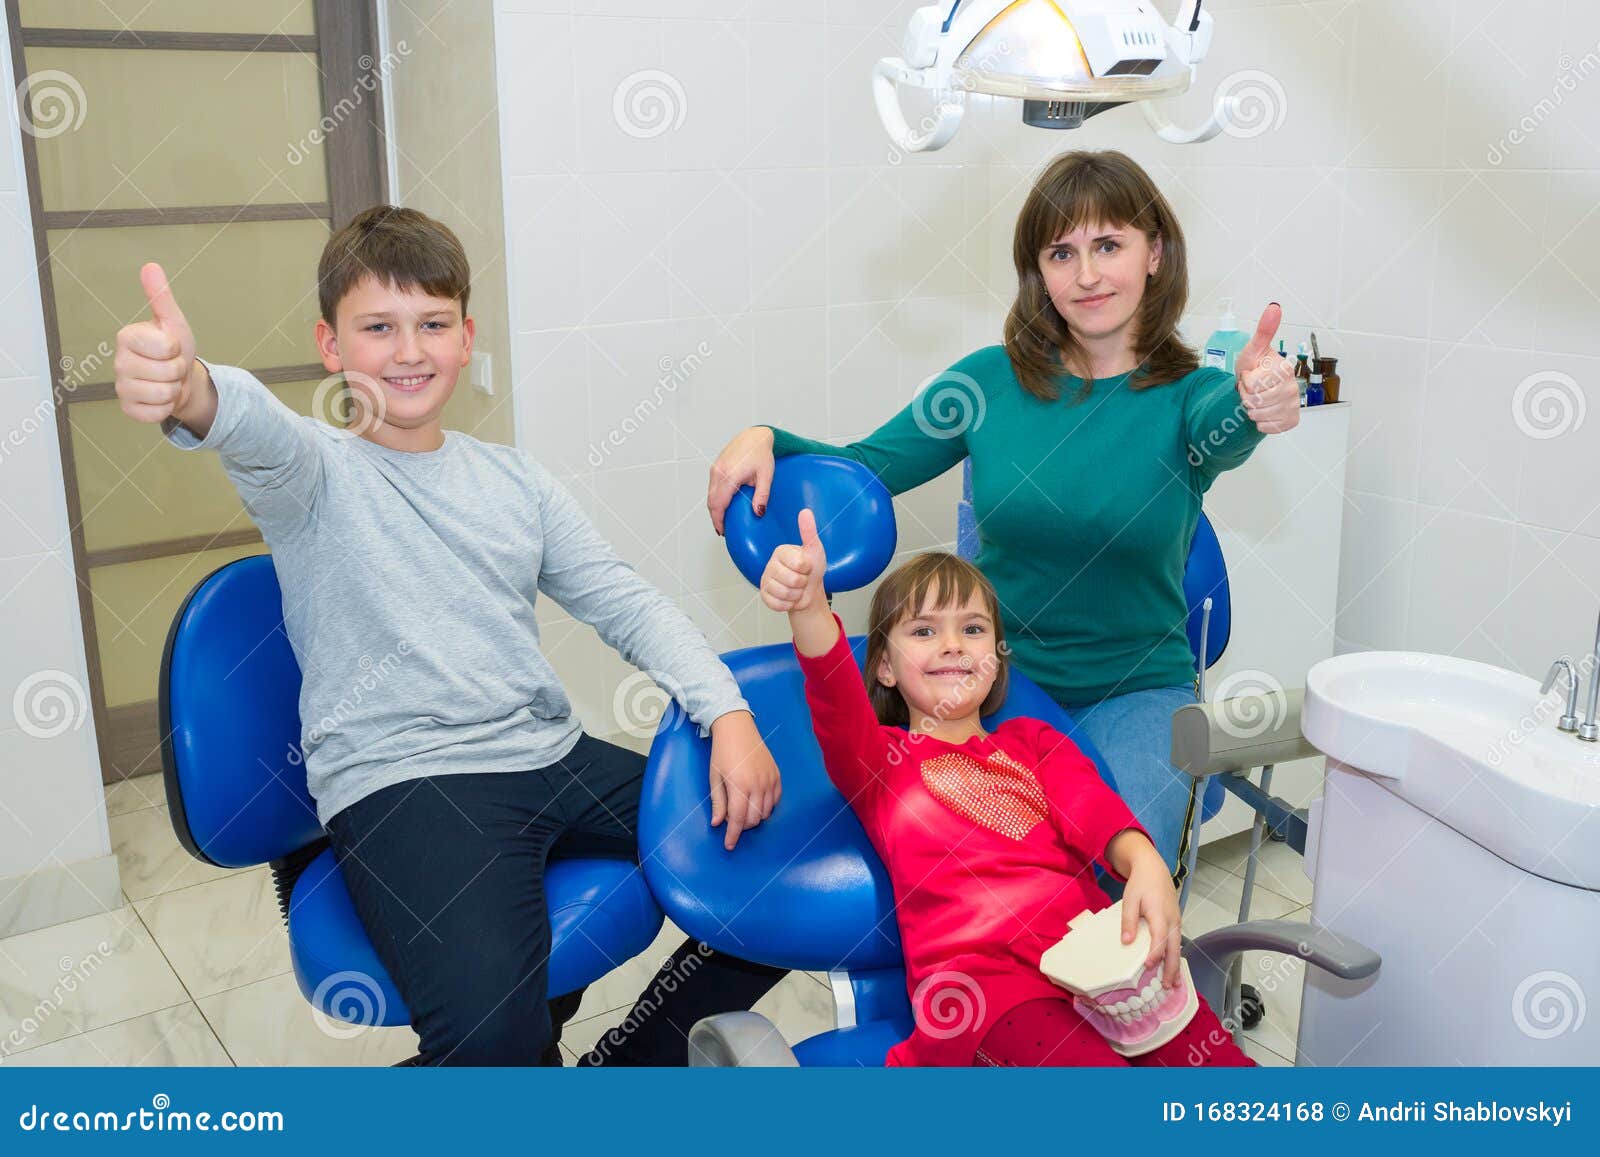 a happy family in a dentistÃ¢â¬â¢s office